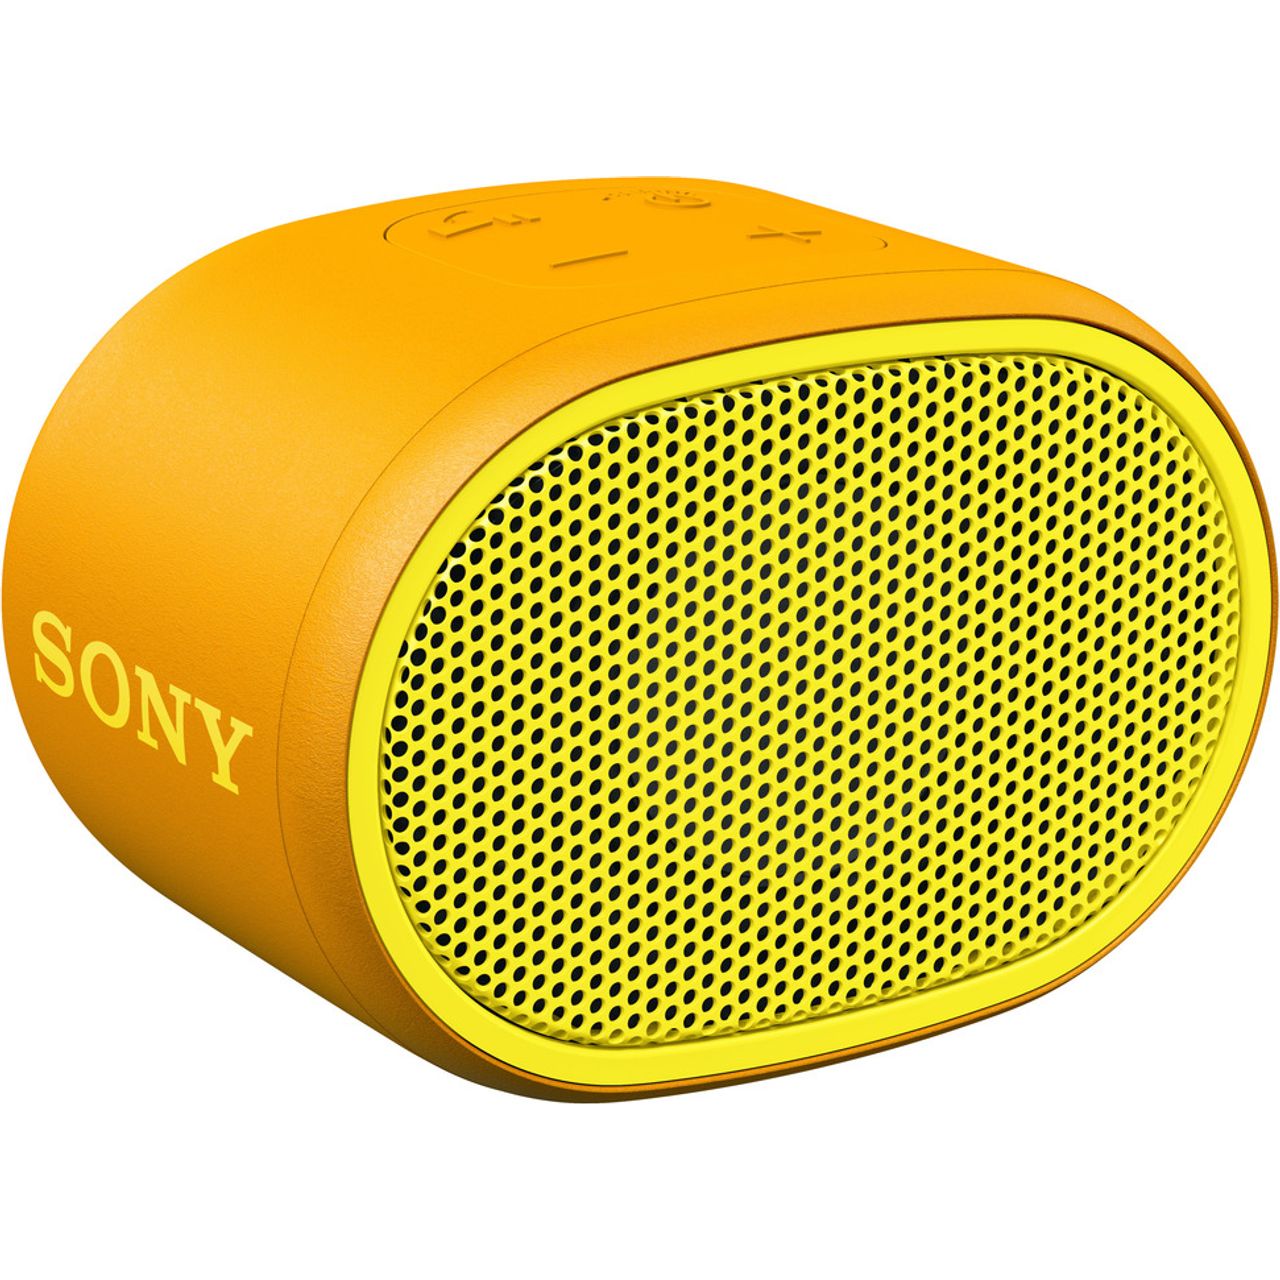 Sony XB01 EXTRA BASS™ Portable Wireless Speaker Review